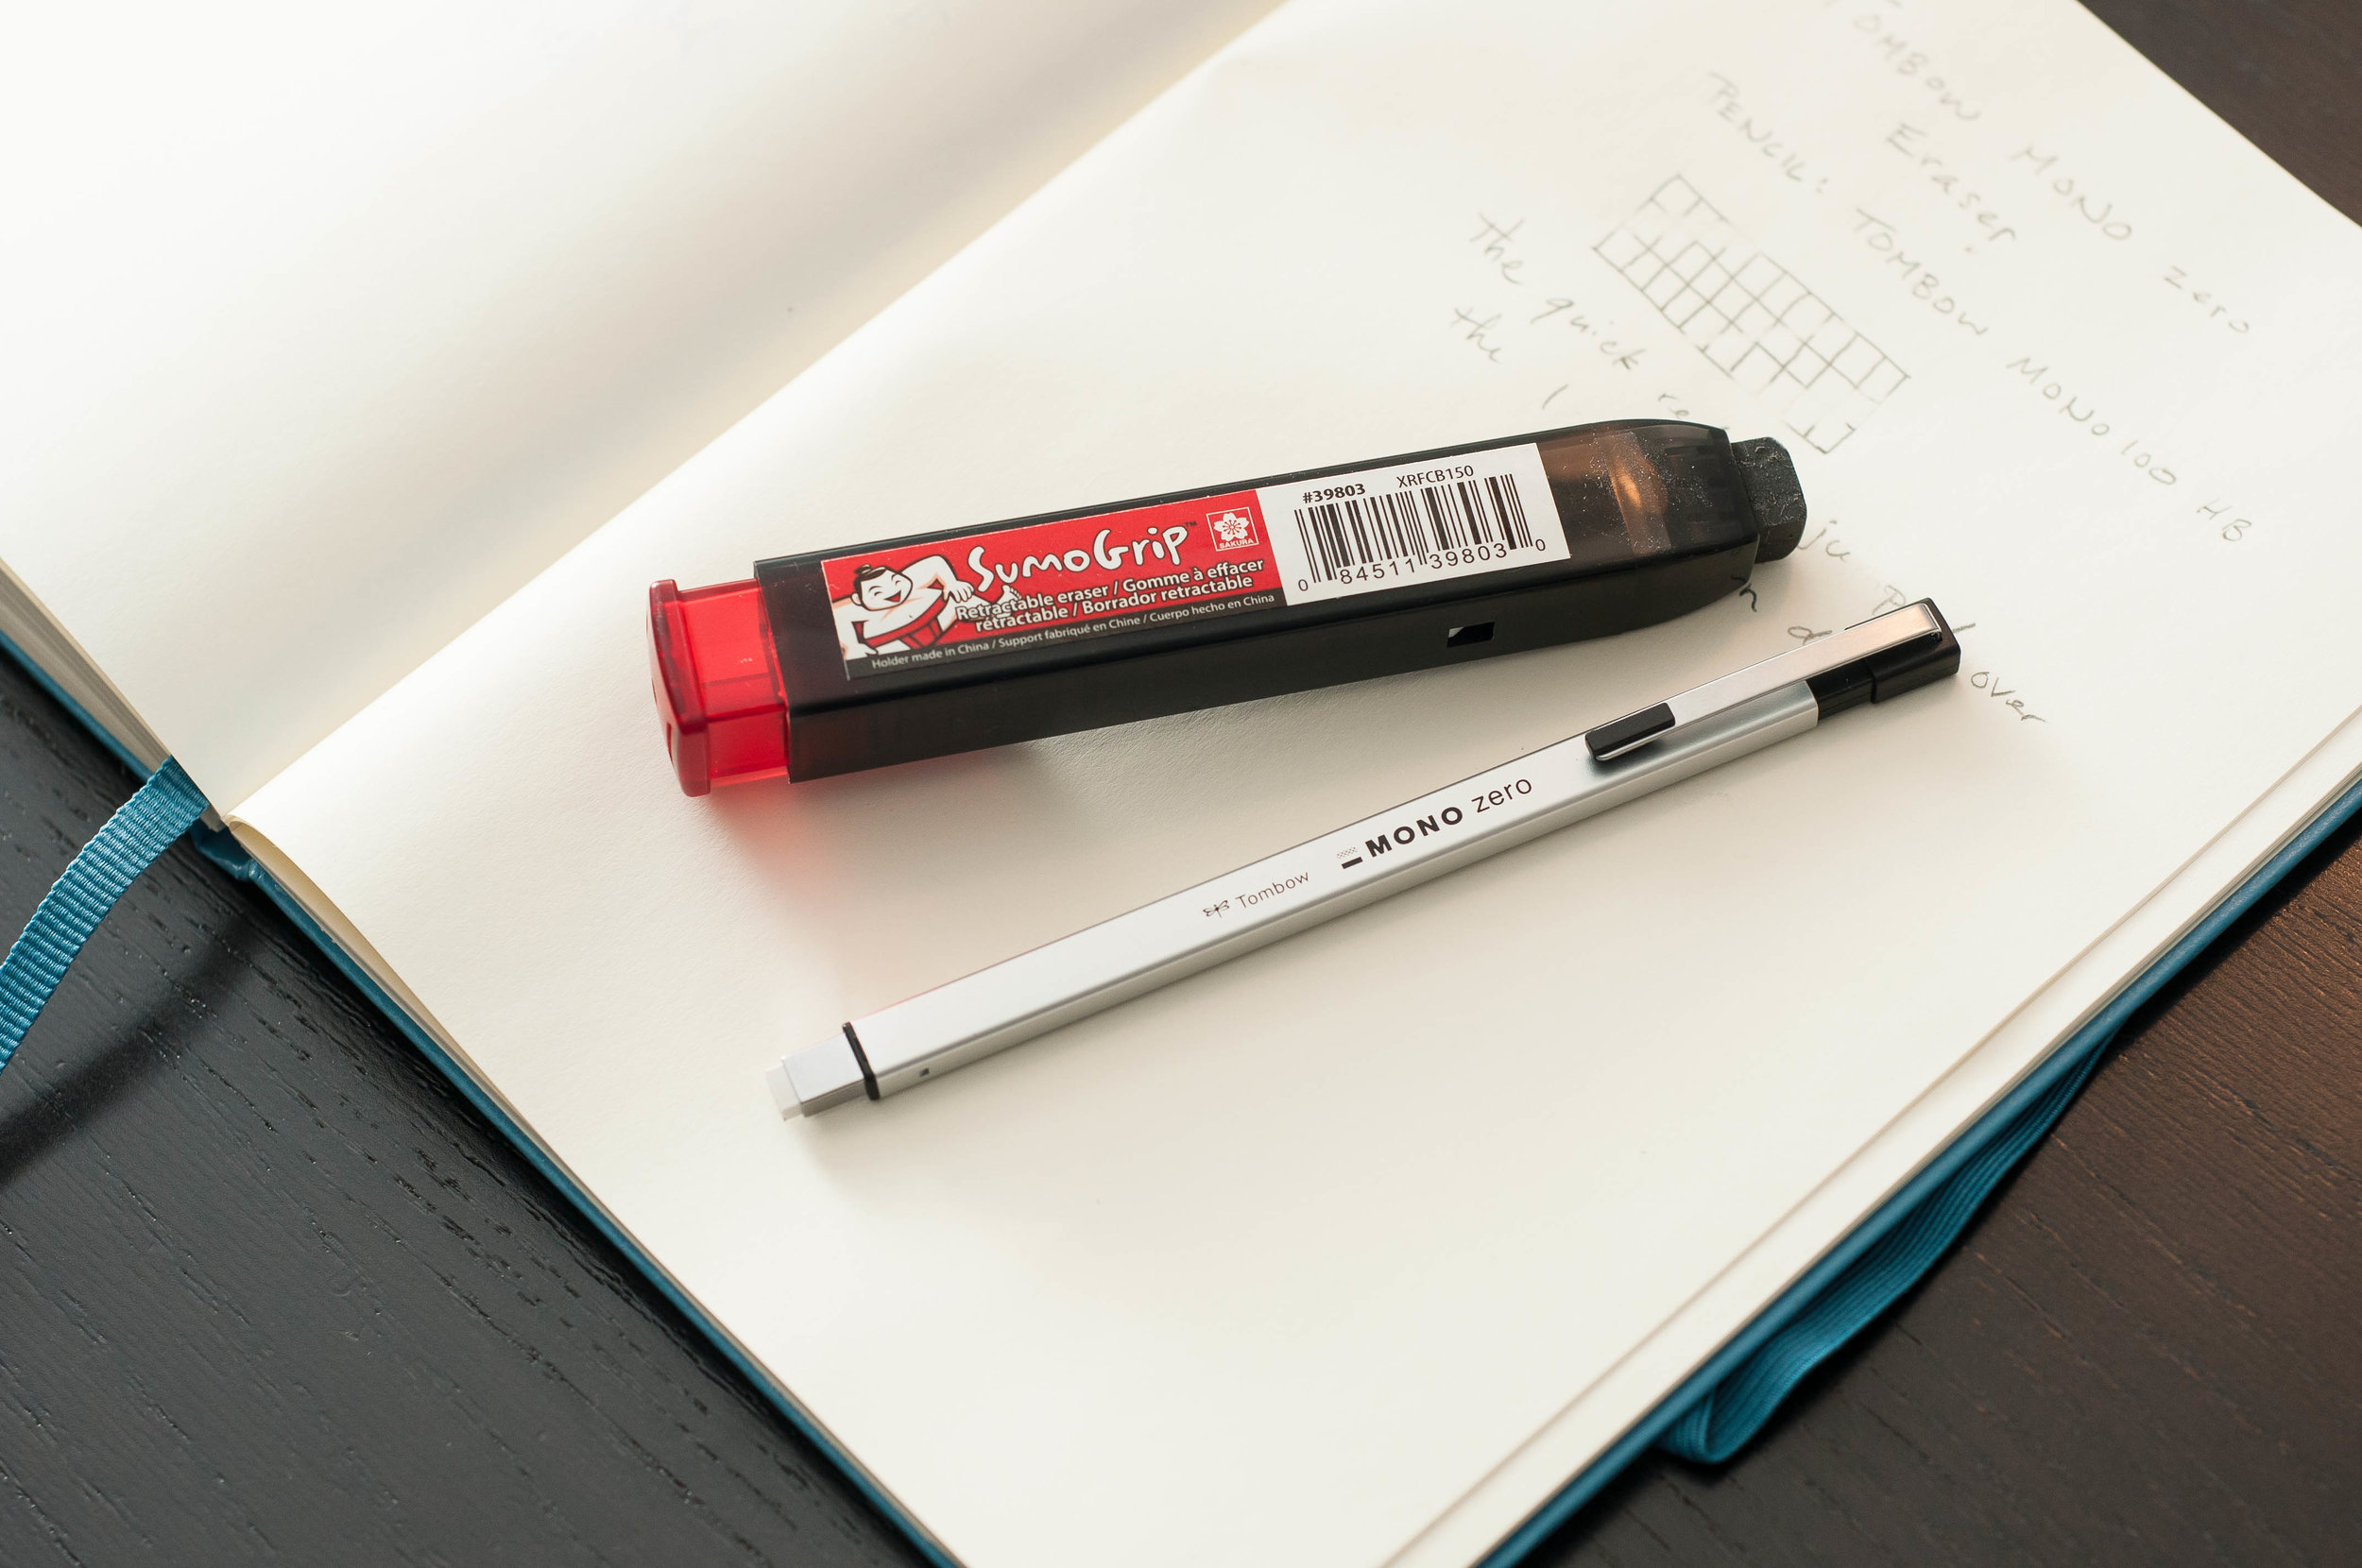 DMP - Dave's Mechanical Pencils: Tombow Mono Zero Stick Eraser Review